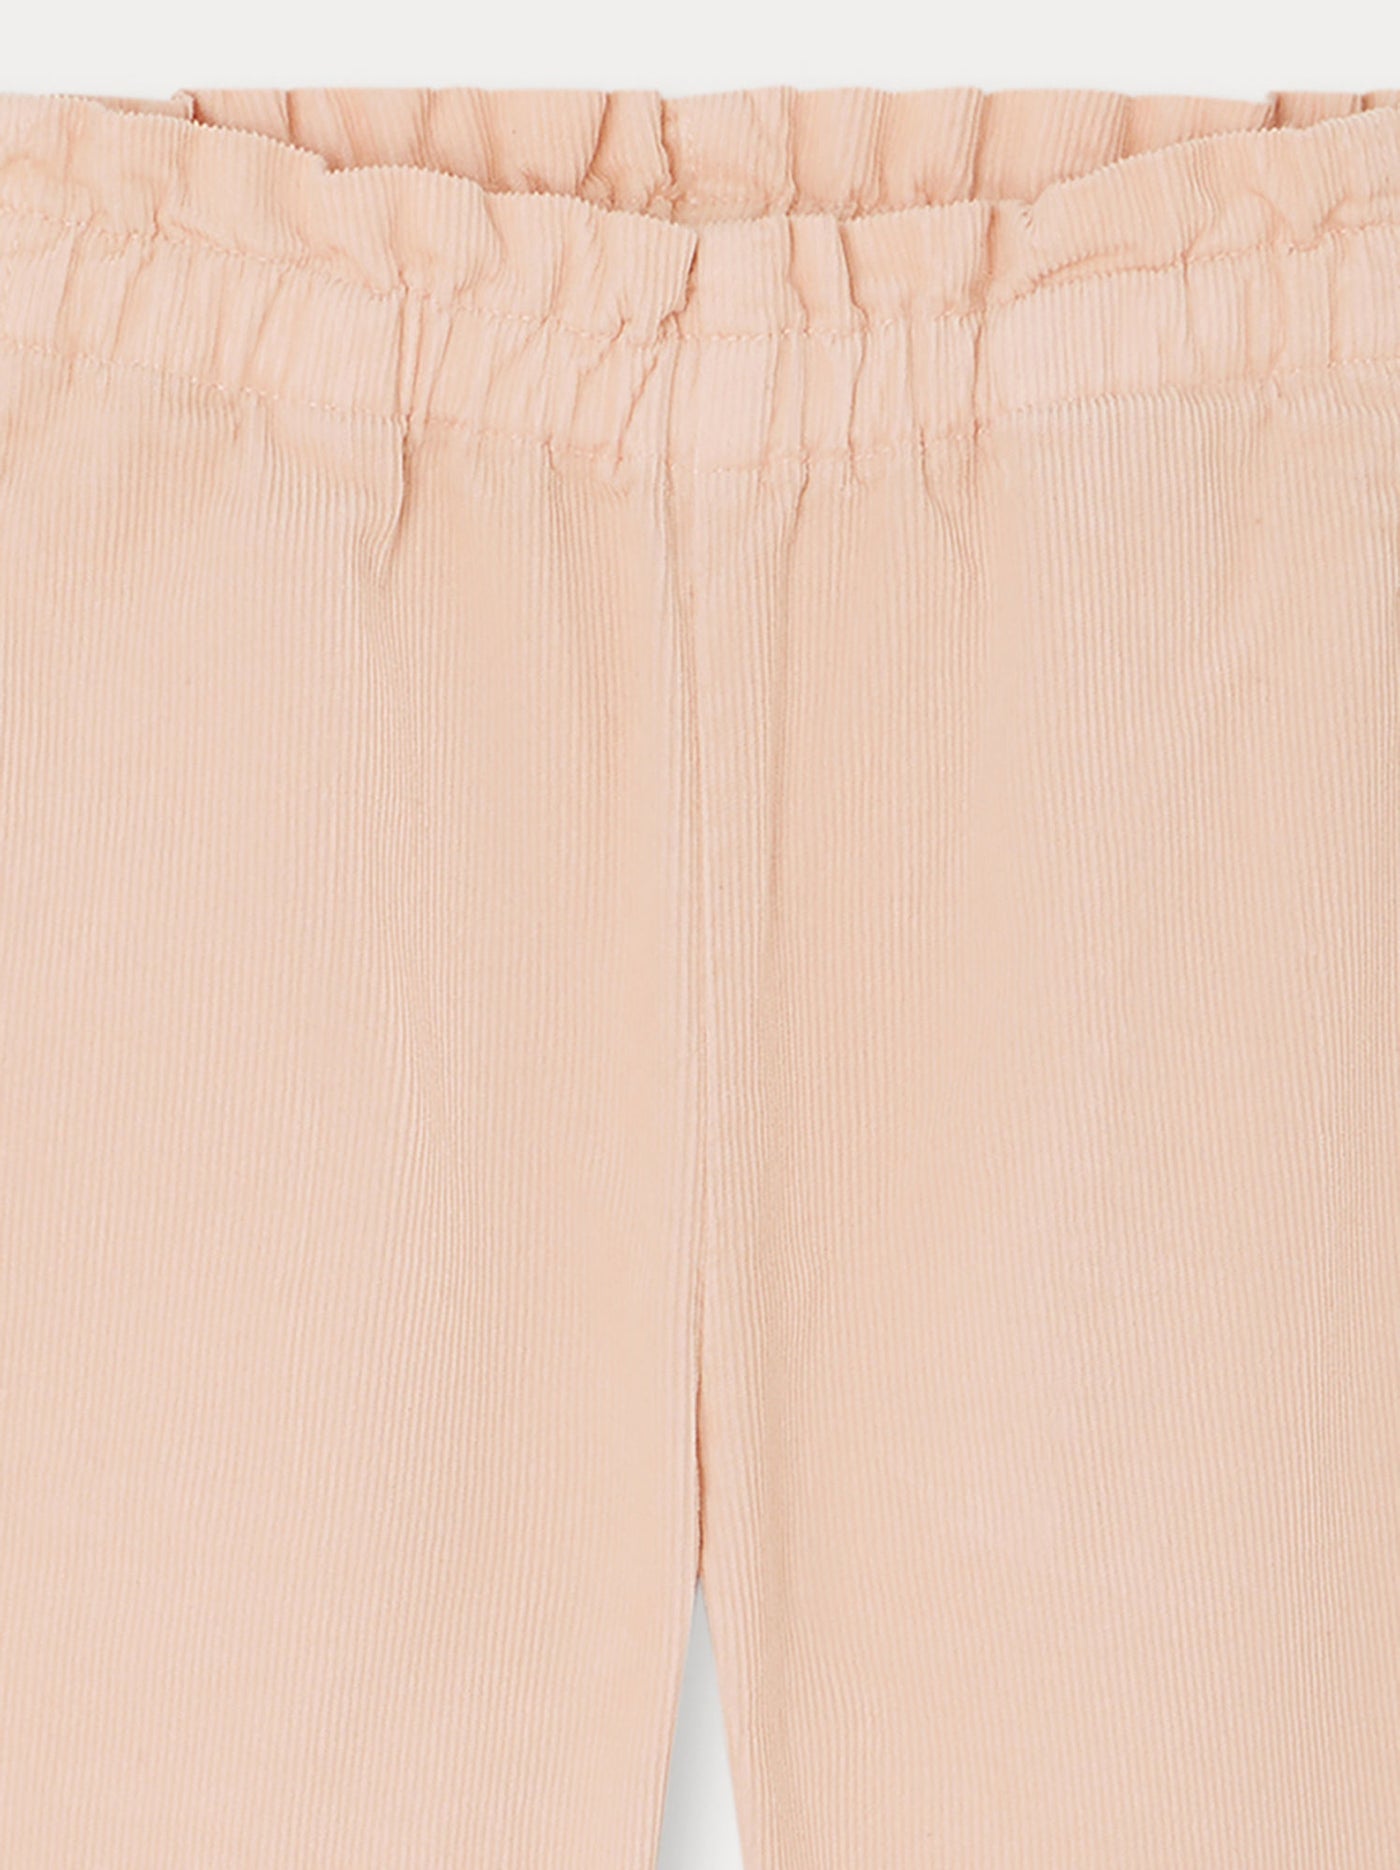 Pants pink blush • Bonpoint